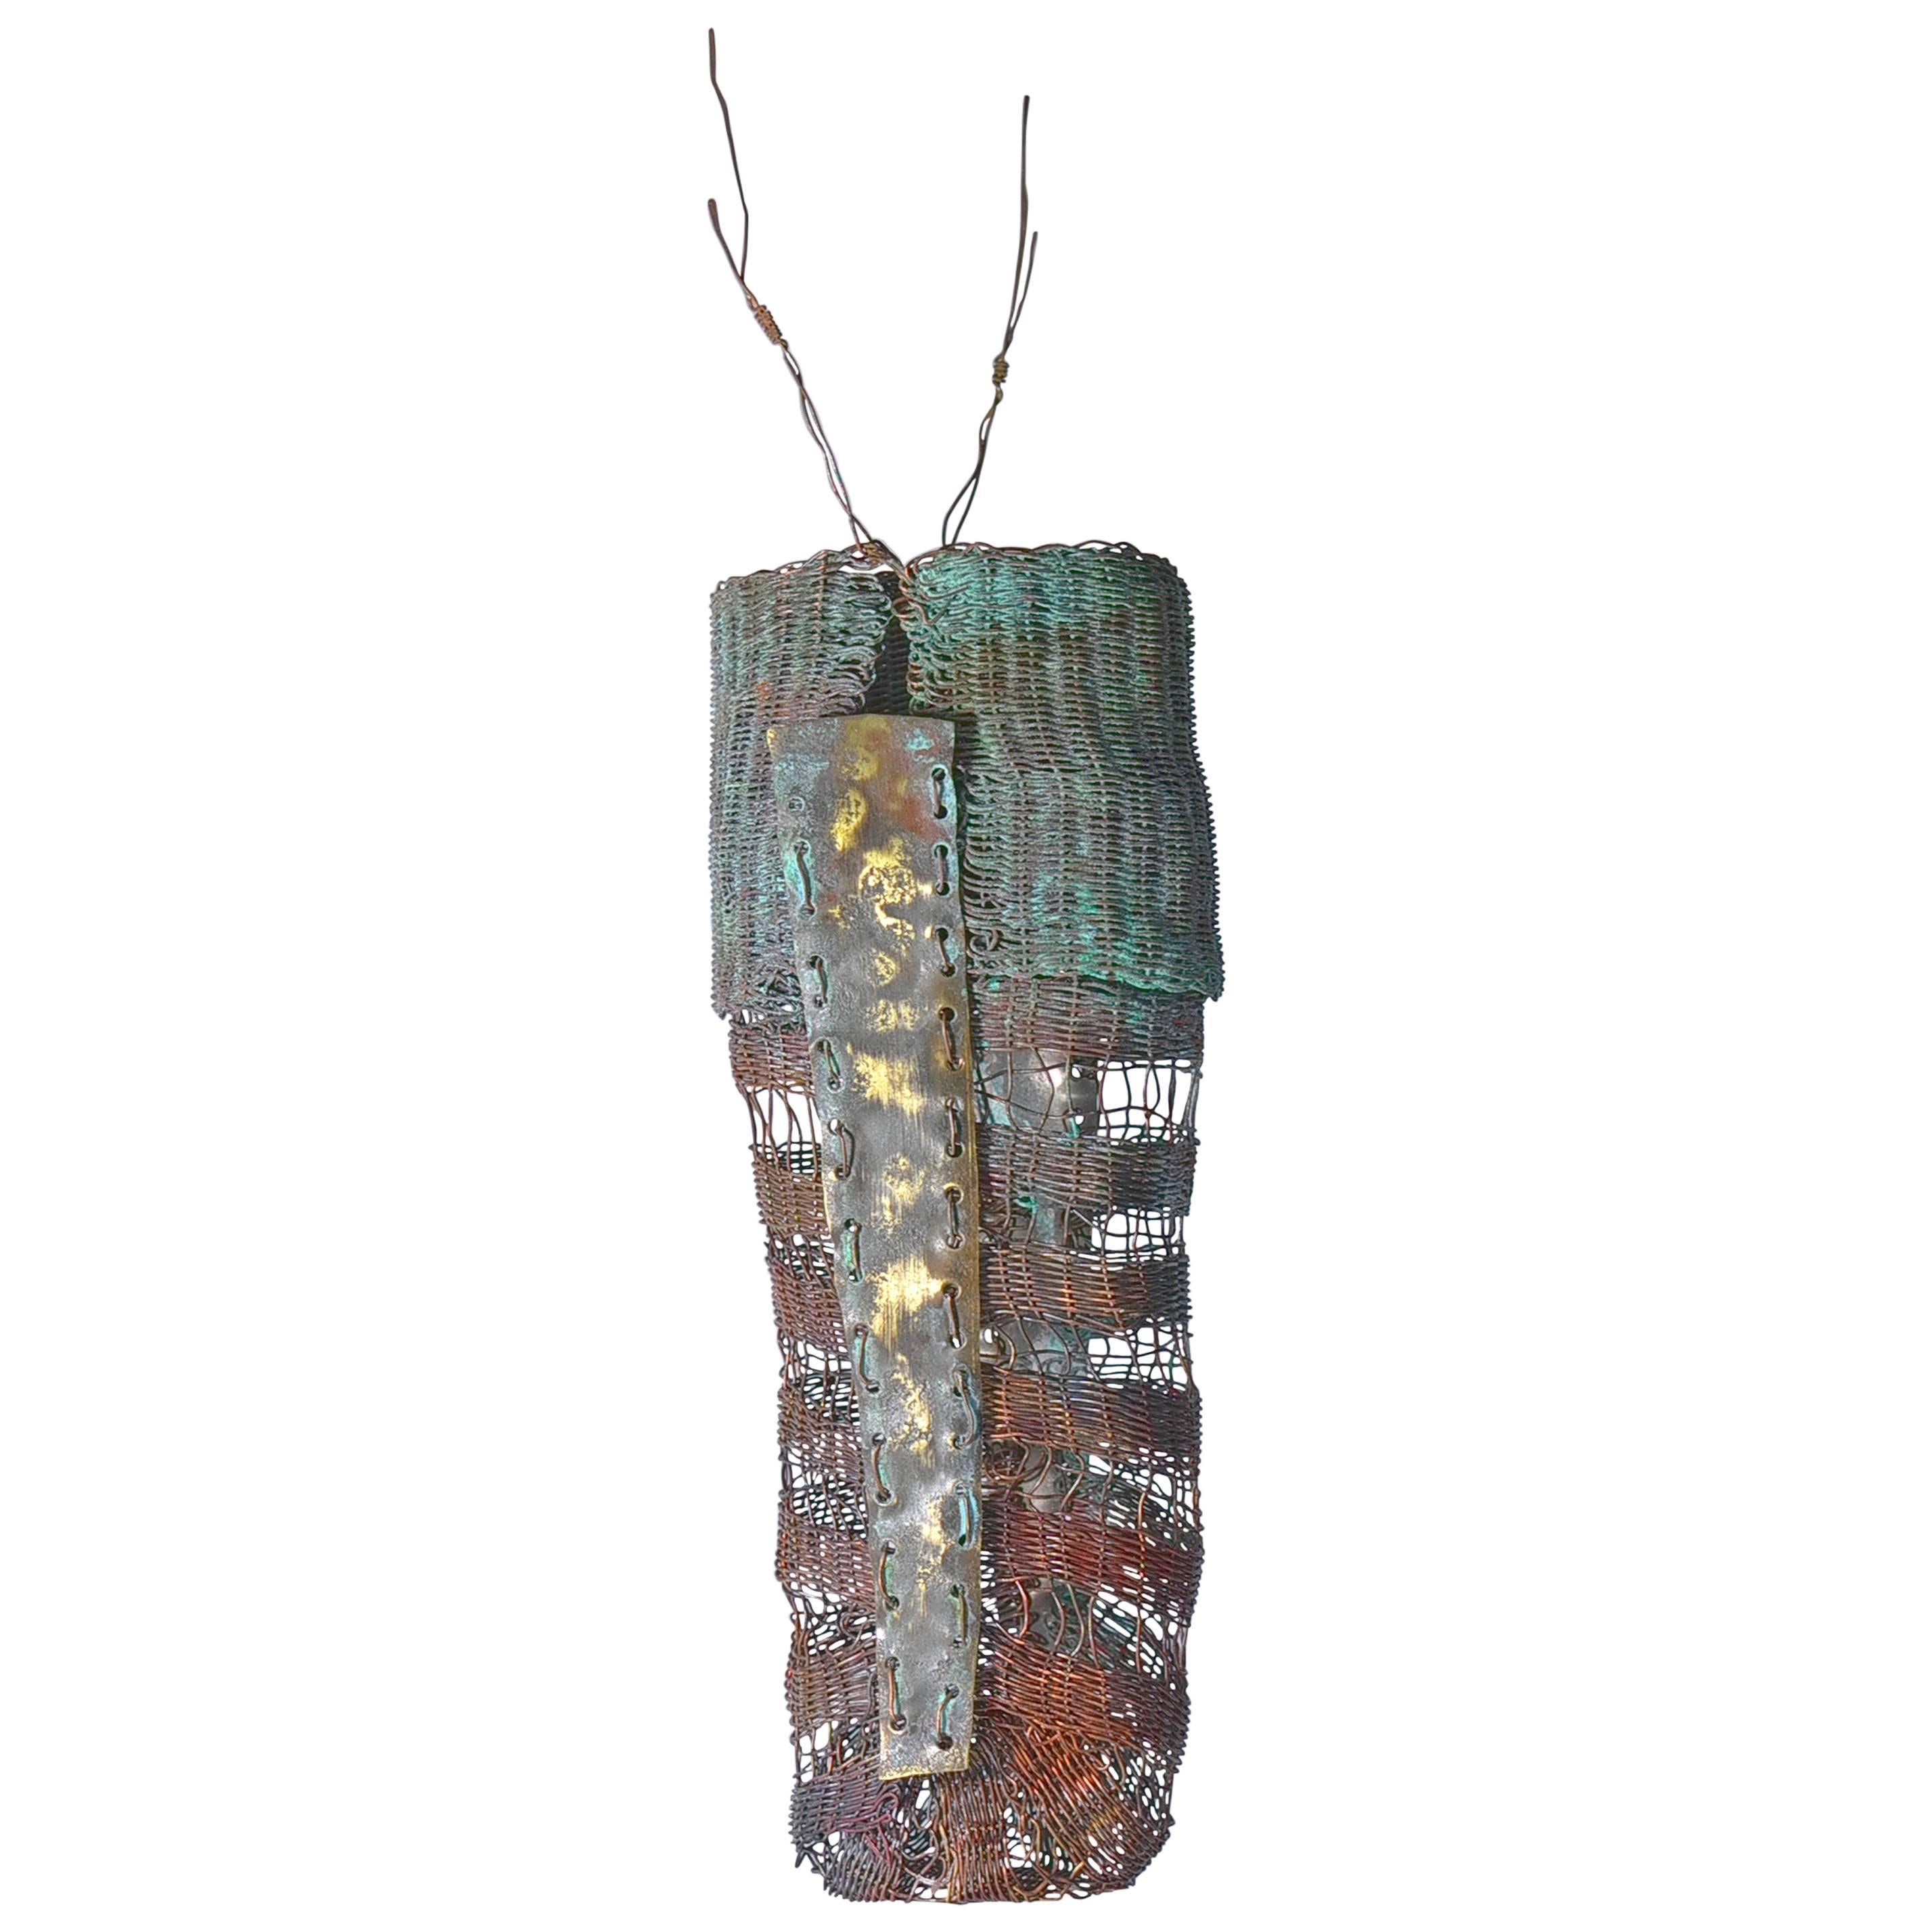 Kieta Jackson "Sedentary" Brass and Copper Sculpture, 2015 For Sale